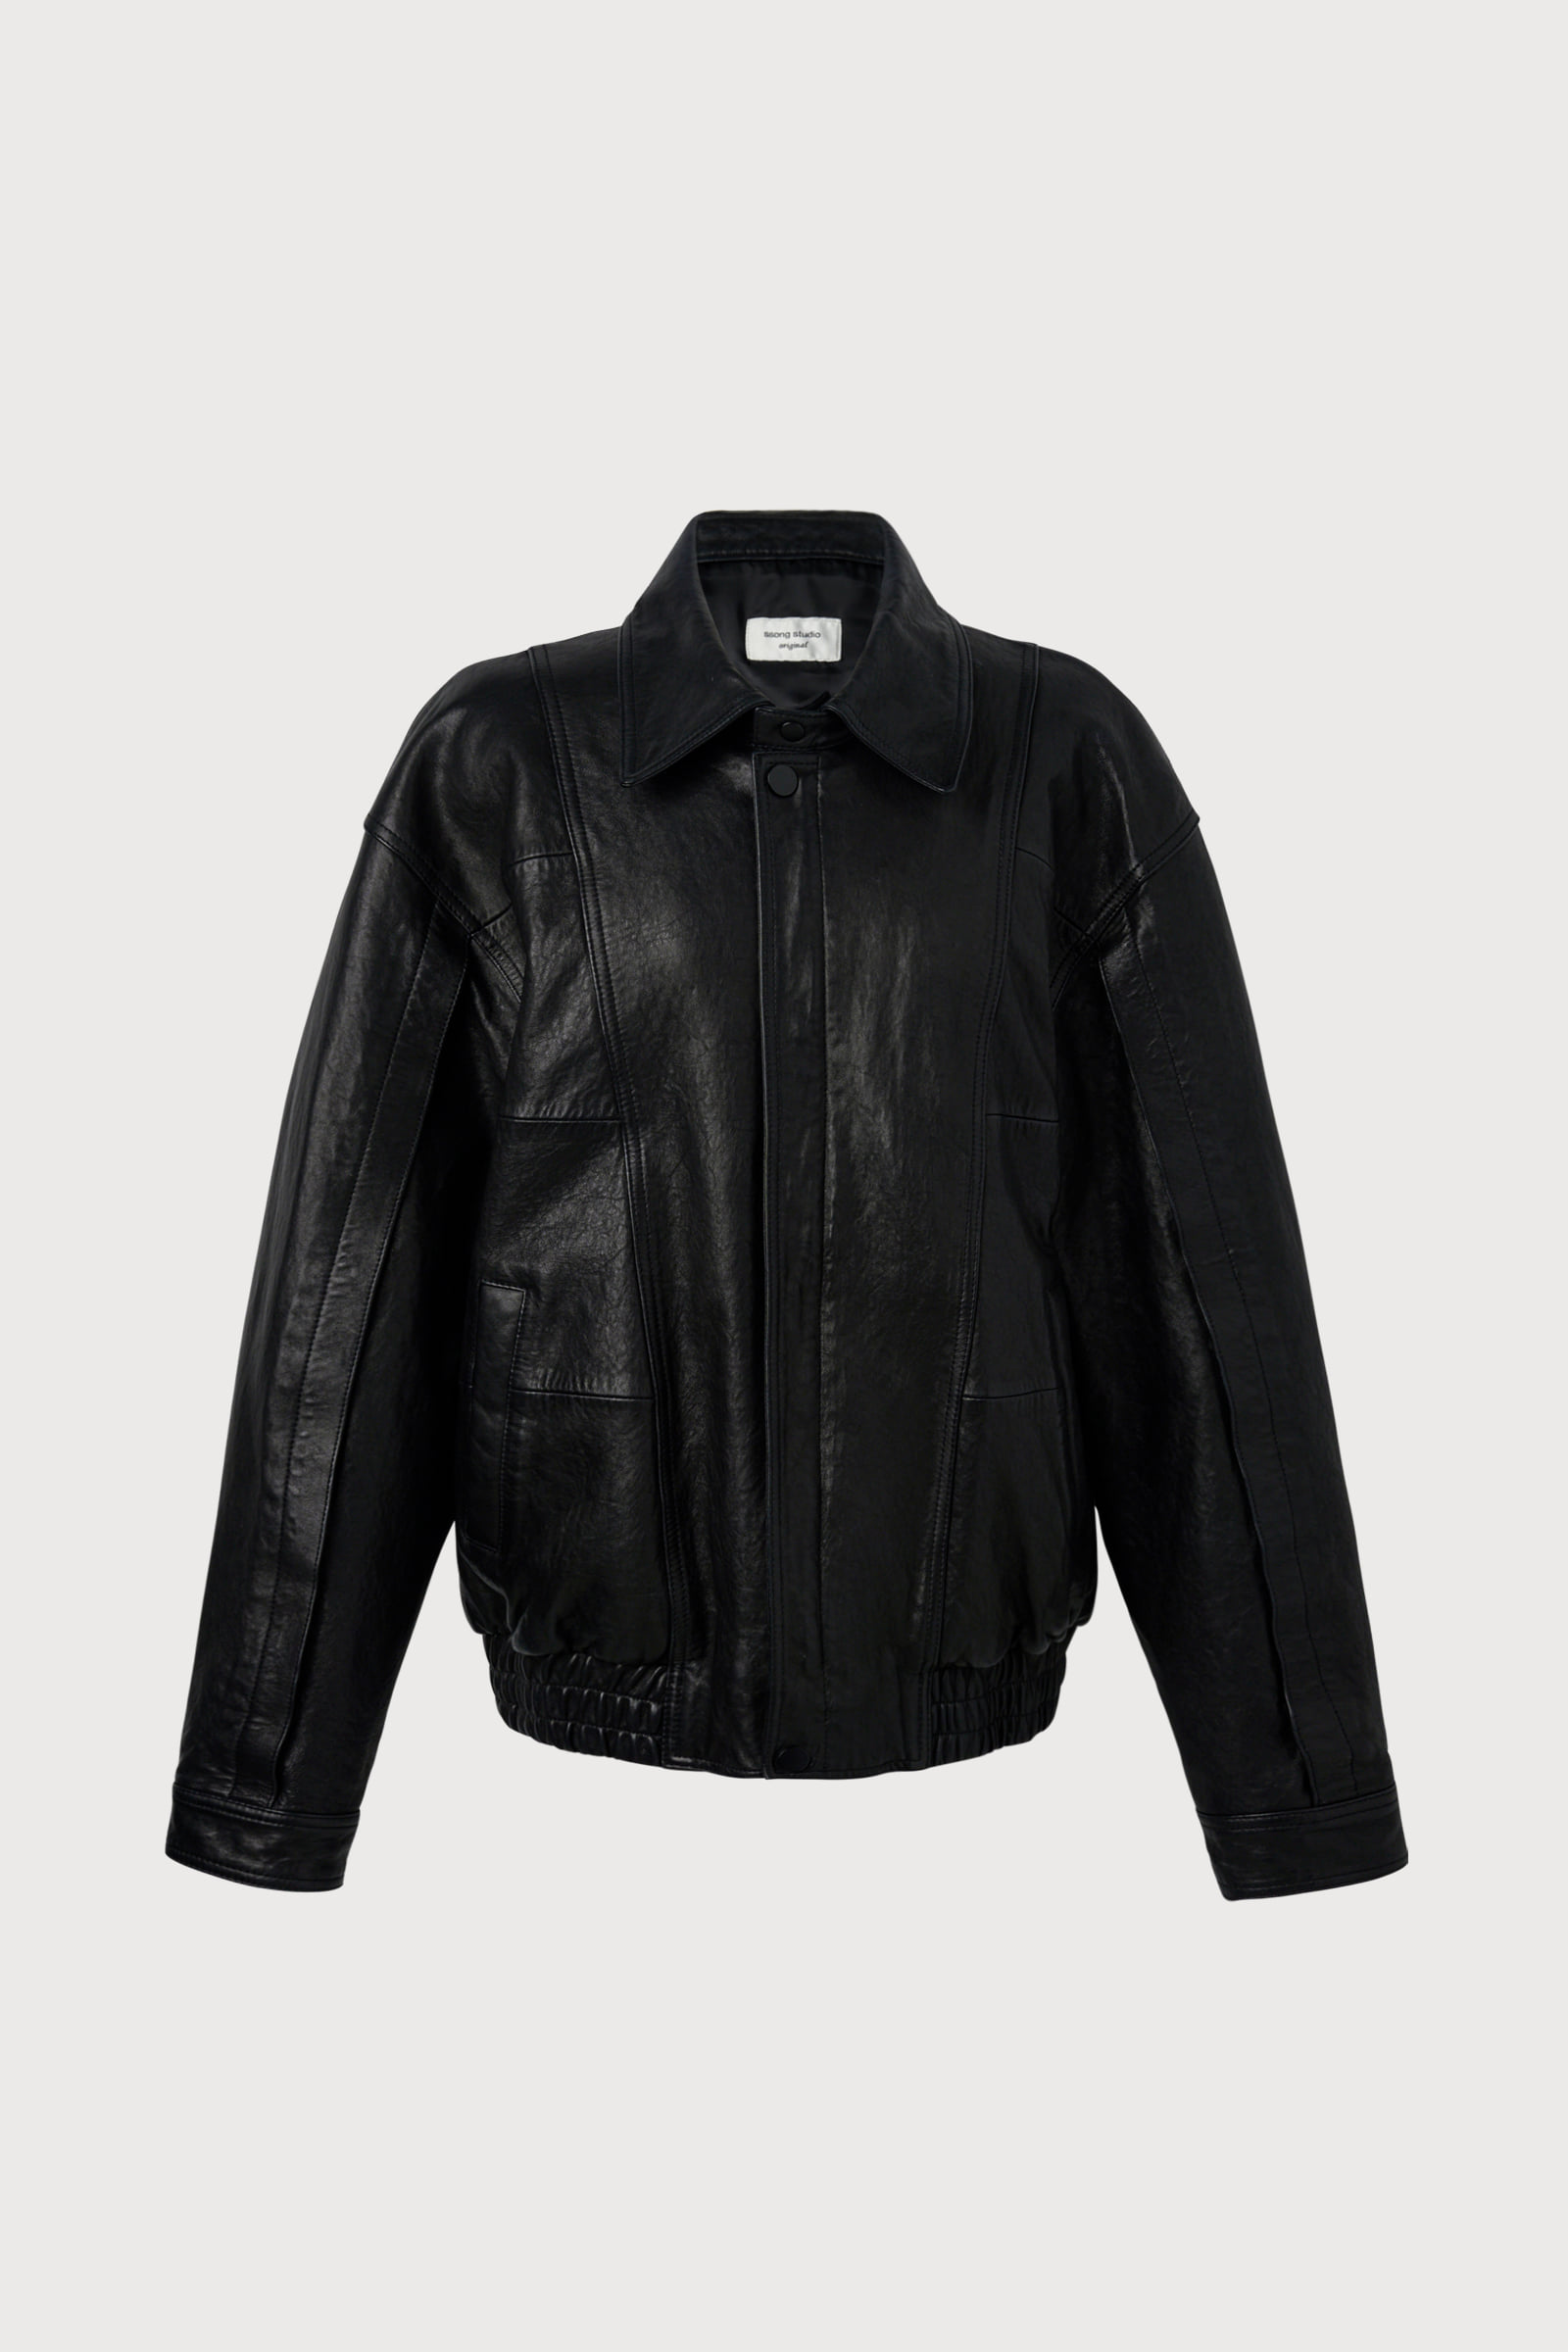 Black vintage leather jacket (Re-stock)